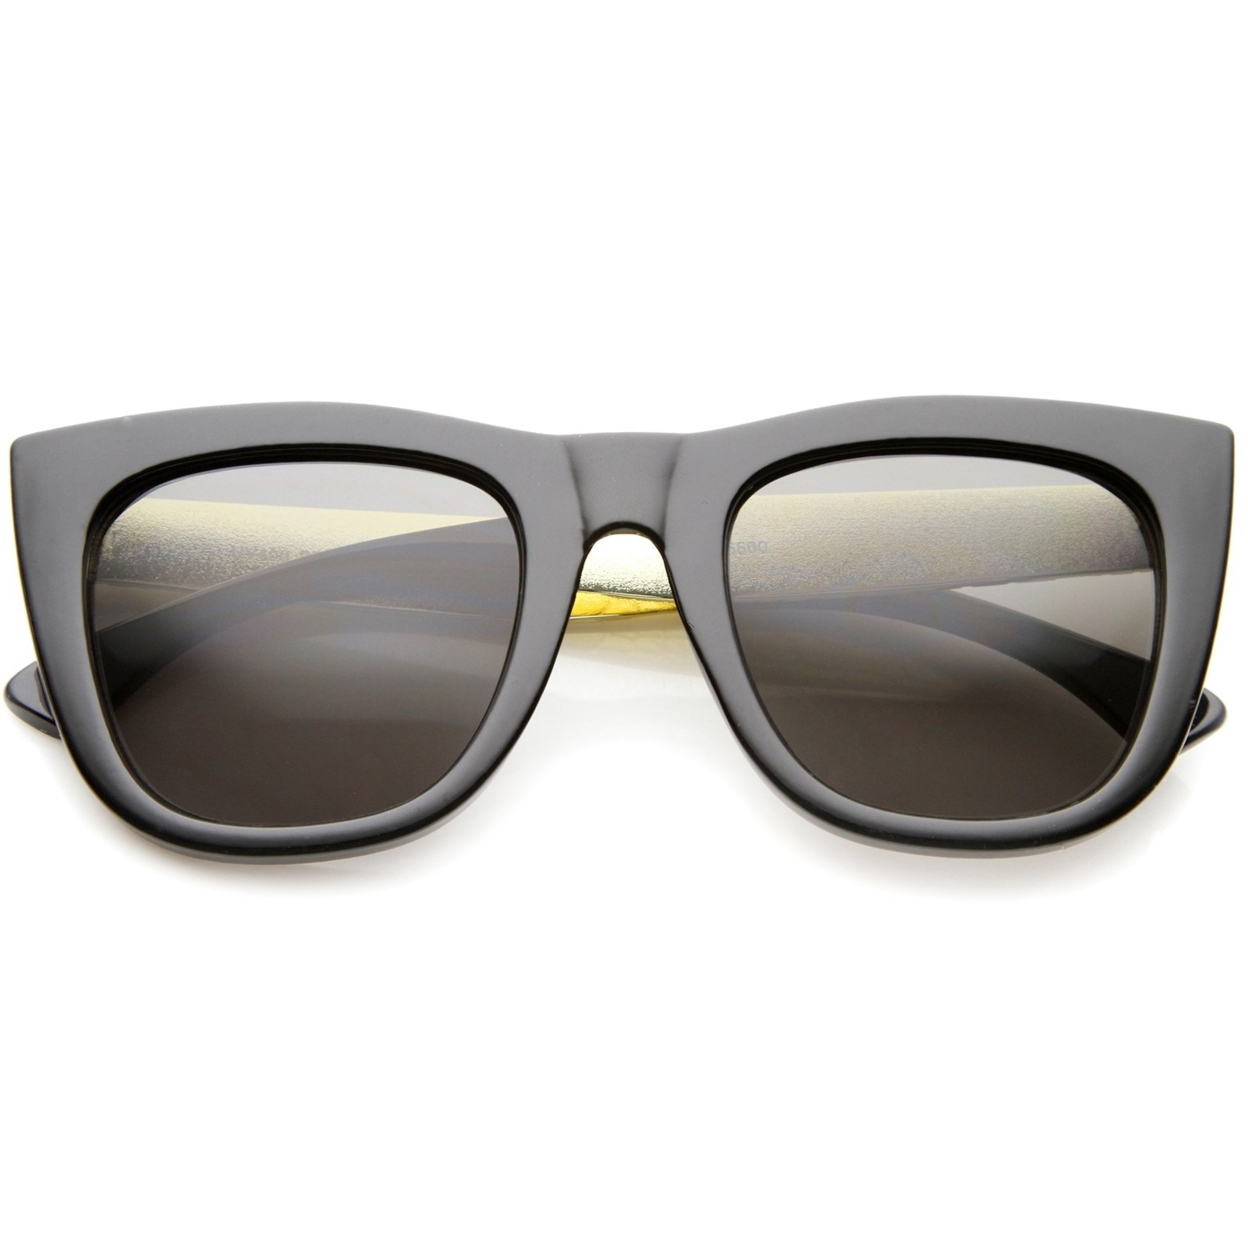 High Fashion Alligator Metal Temple Bold Rimmed Flat Top Sunglasses - Black-Gunmetal / Smoke